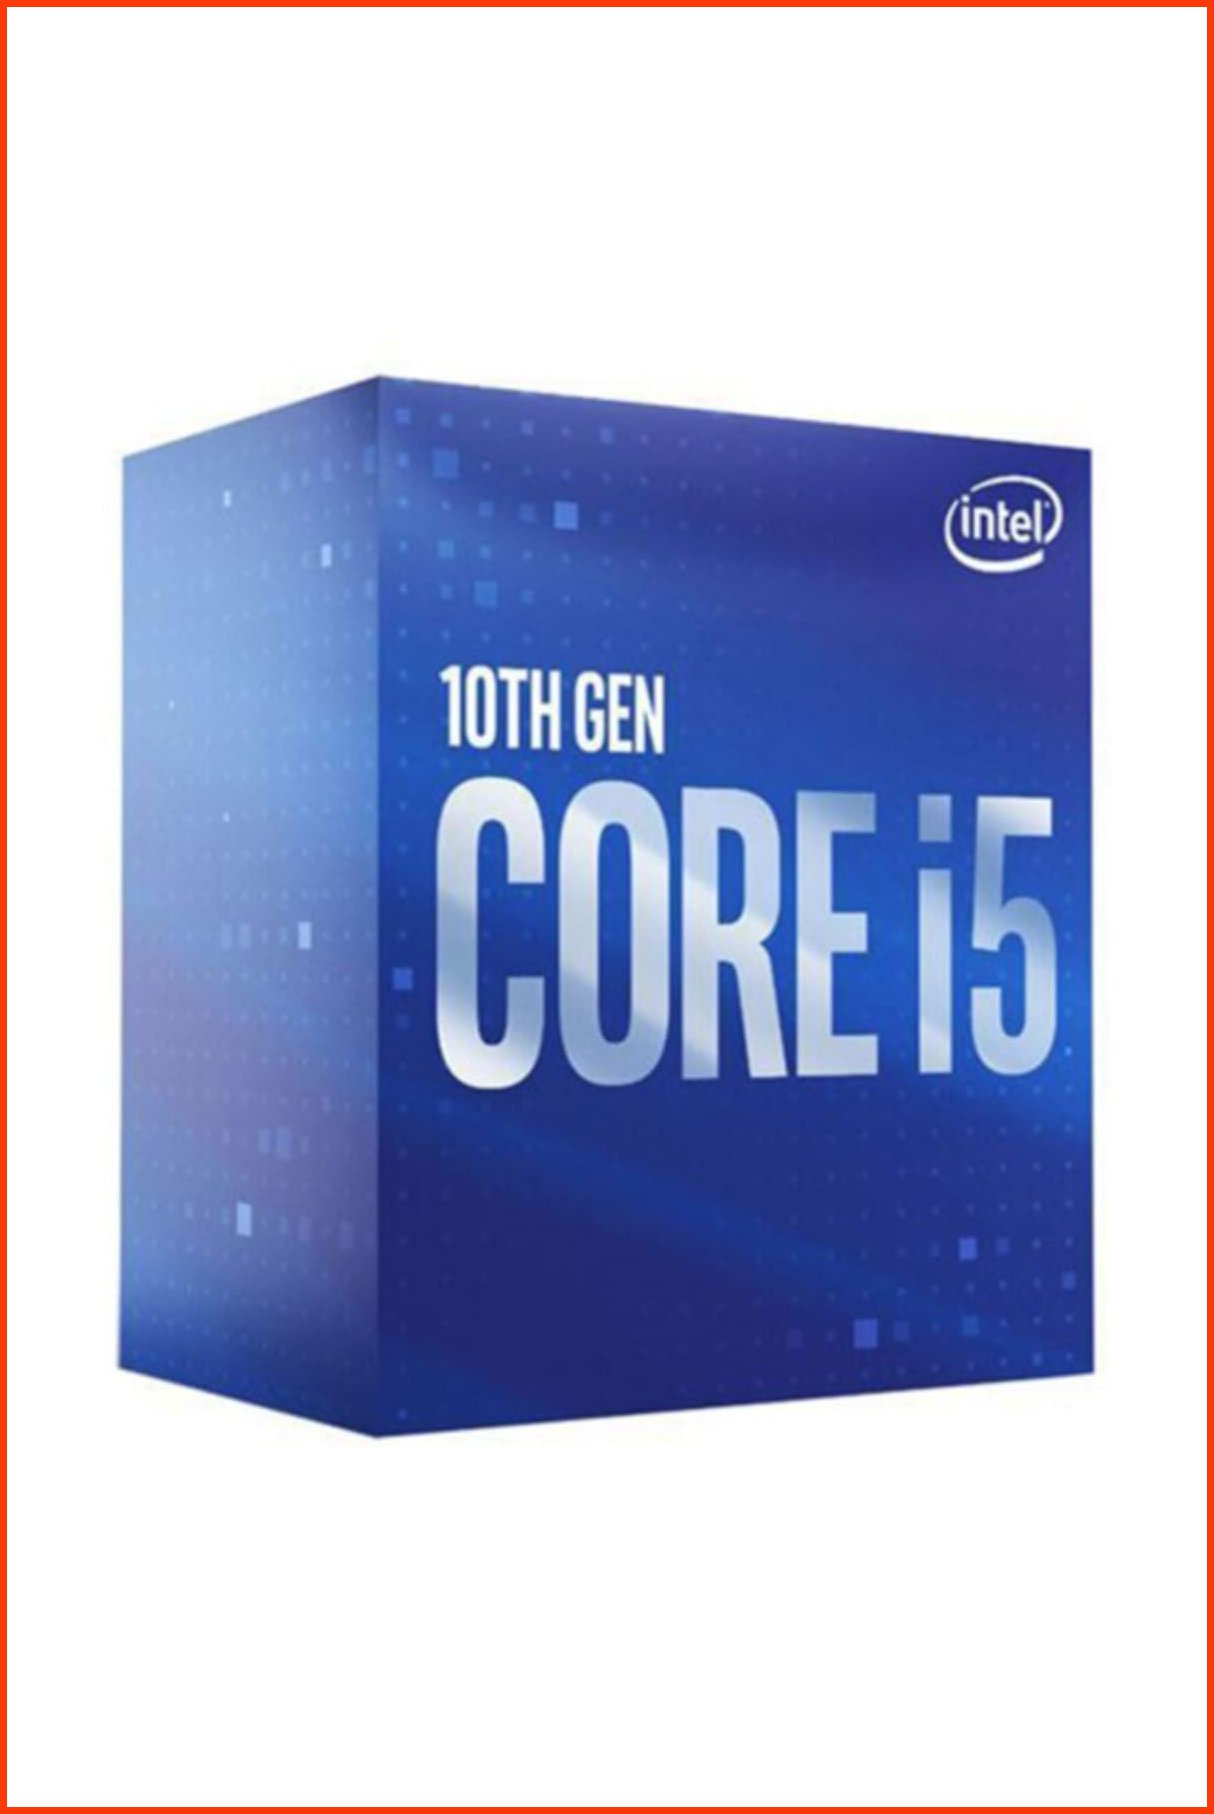 並行輸入品Intel Comet Lake Core i5-10400 2.90Ghz 12MB Cache CPU Desktop Processor